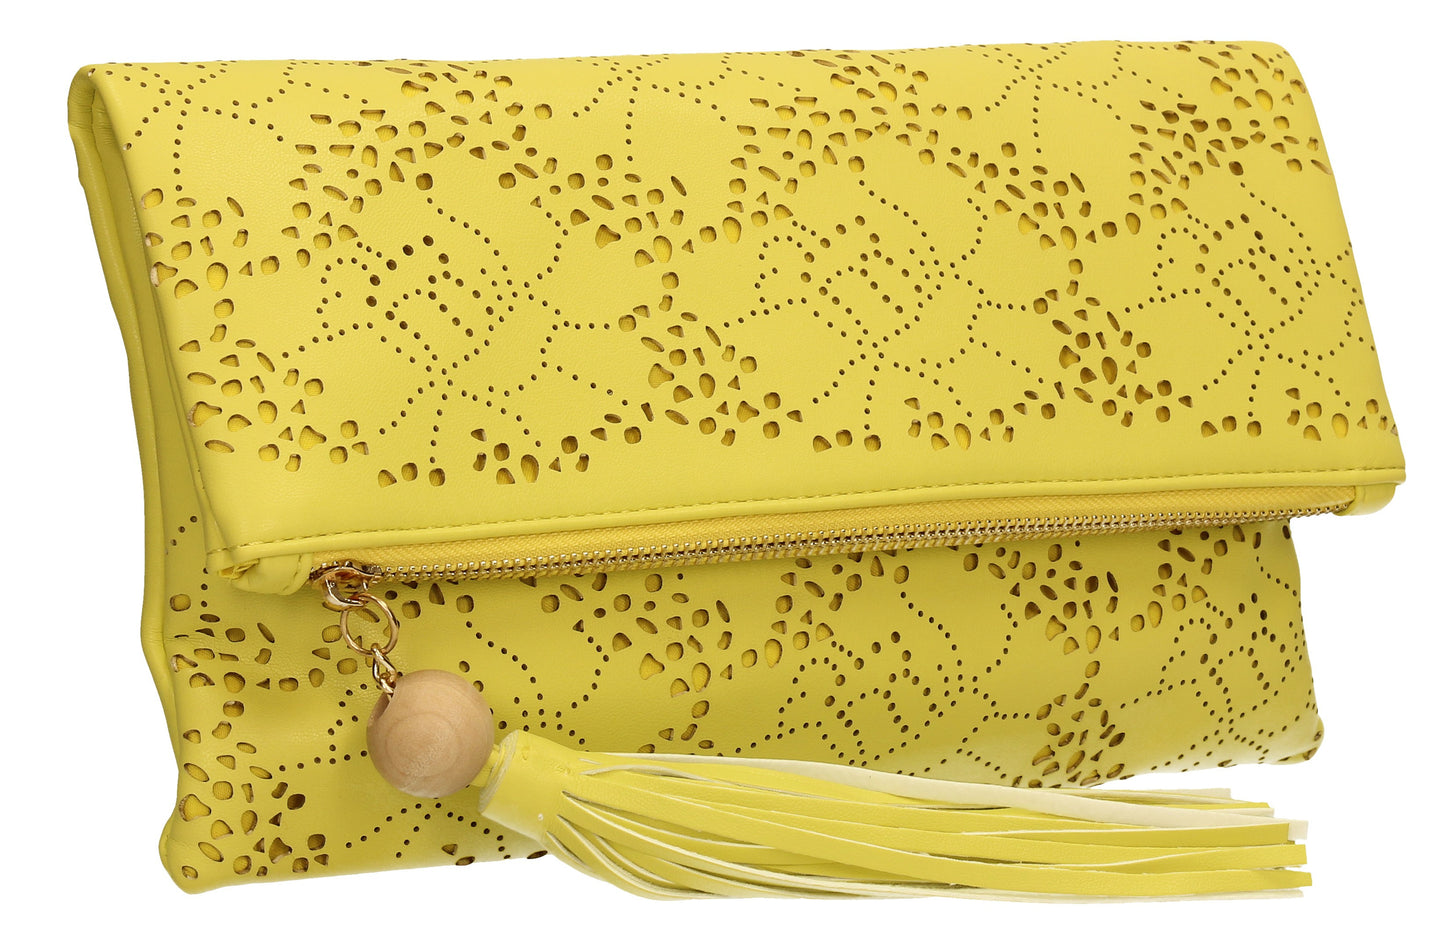 SWANKYSWANS Lena Clutch Bag Yellow Cute Cheap Clutch Bag For Weddings School and Work